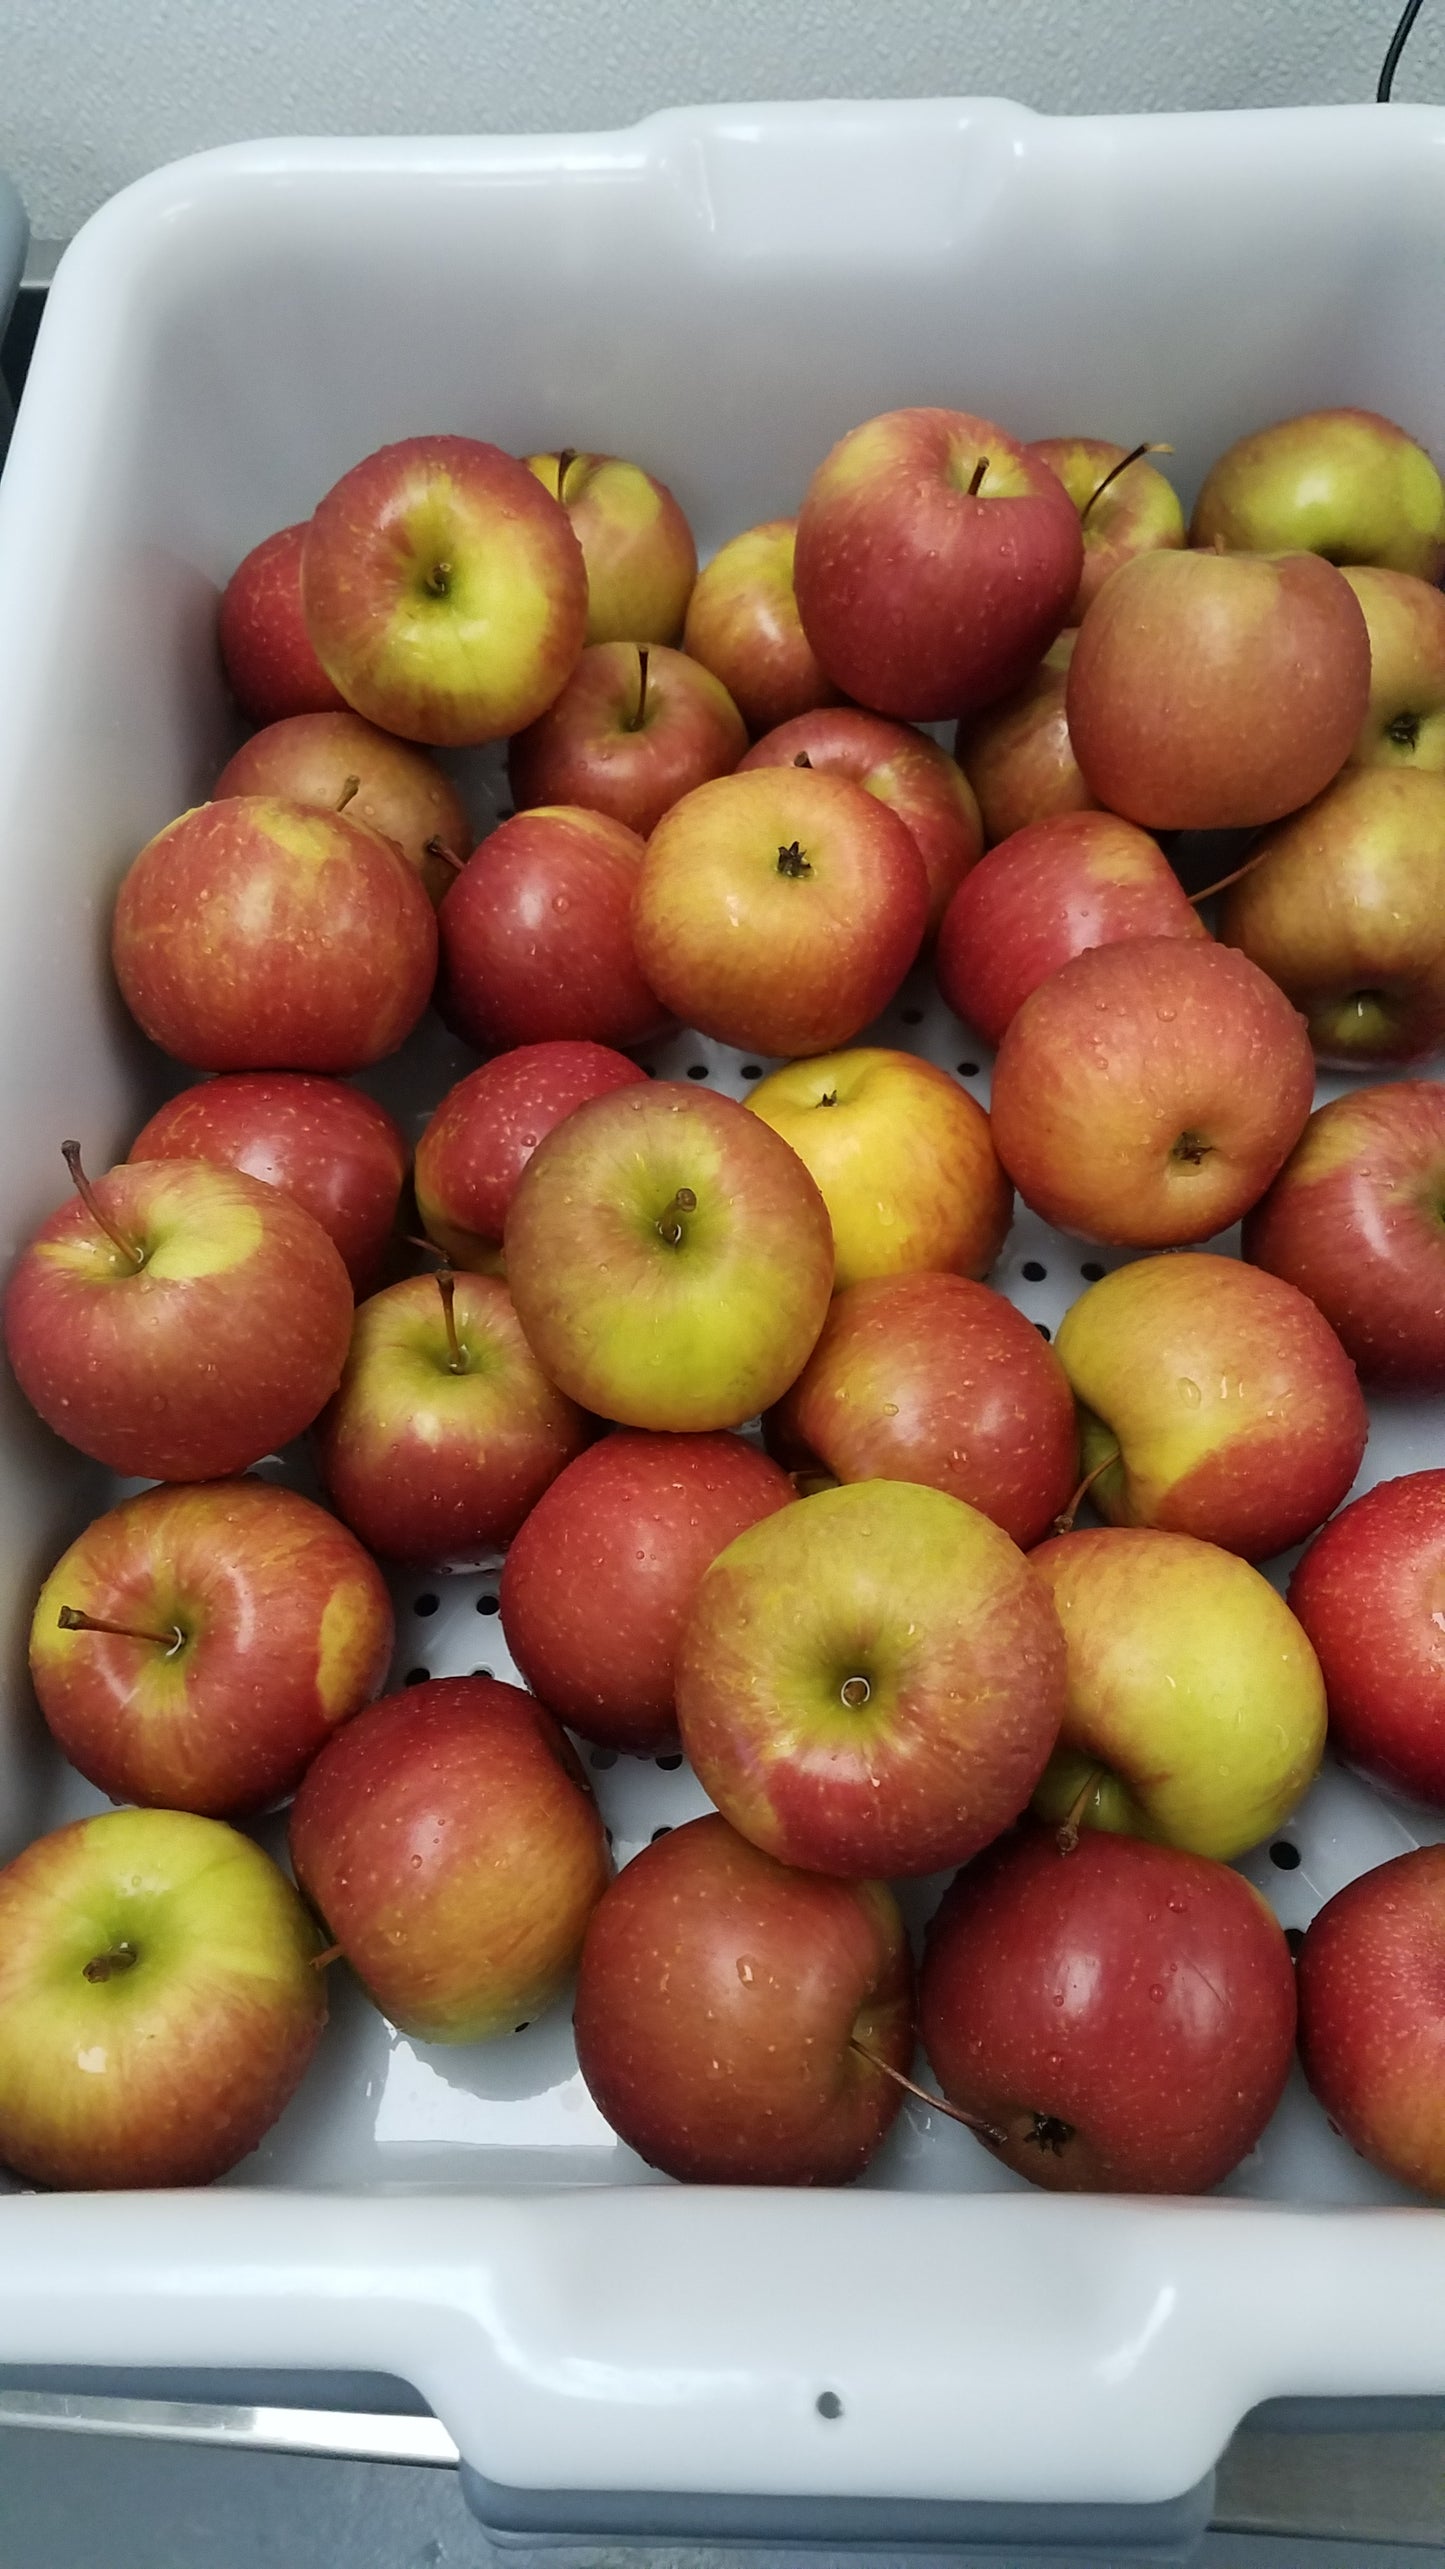 Freeze-Dried Apples Evercrisp Variety